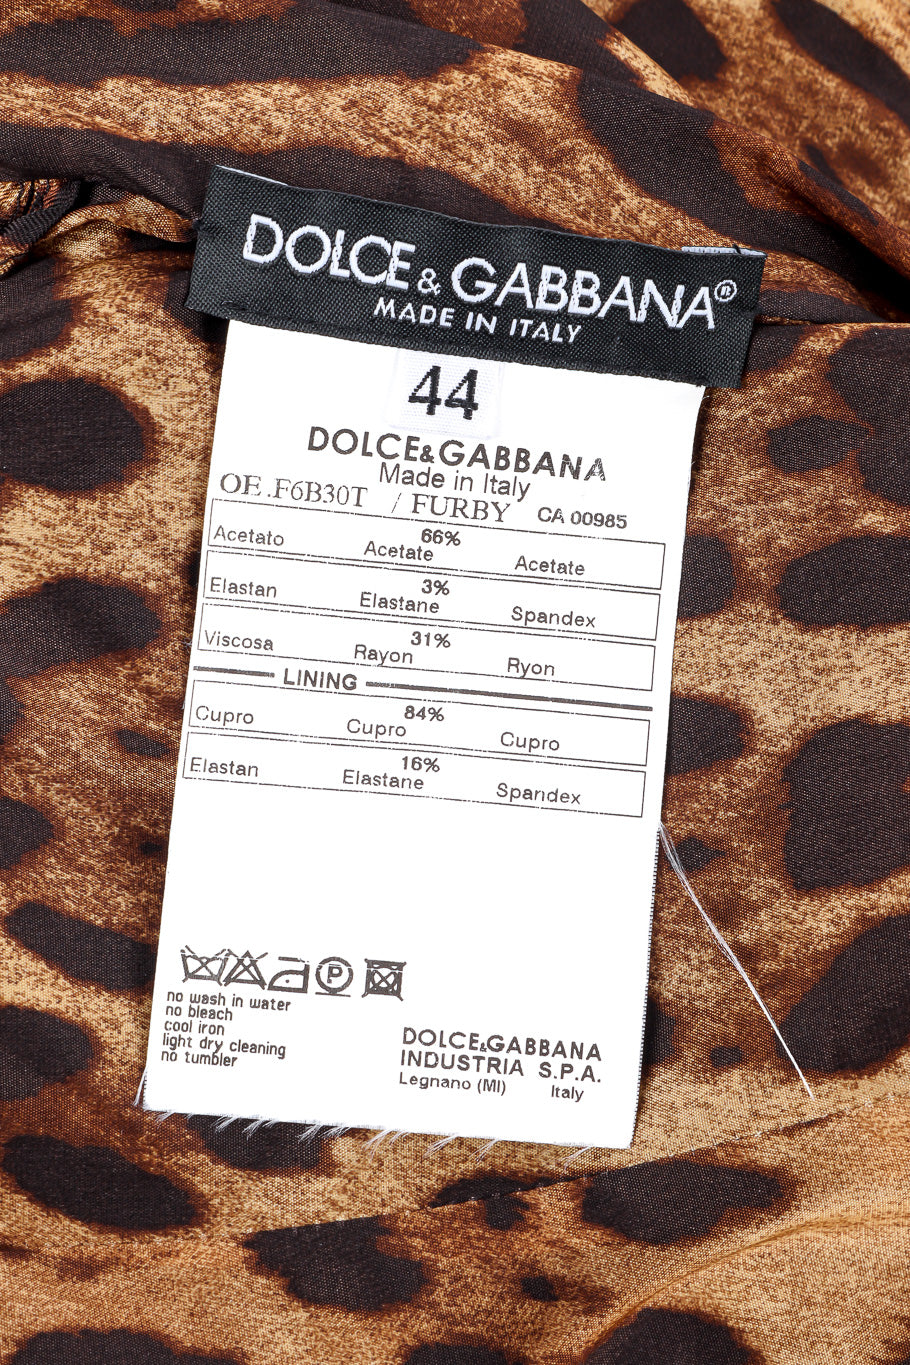 Dolce & Gabbana ruched sheath dress designer label and fabric content @recessla